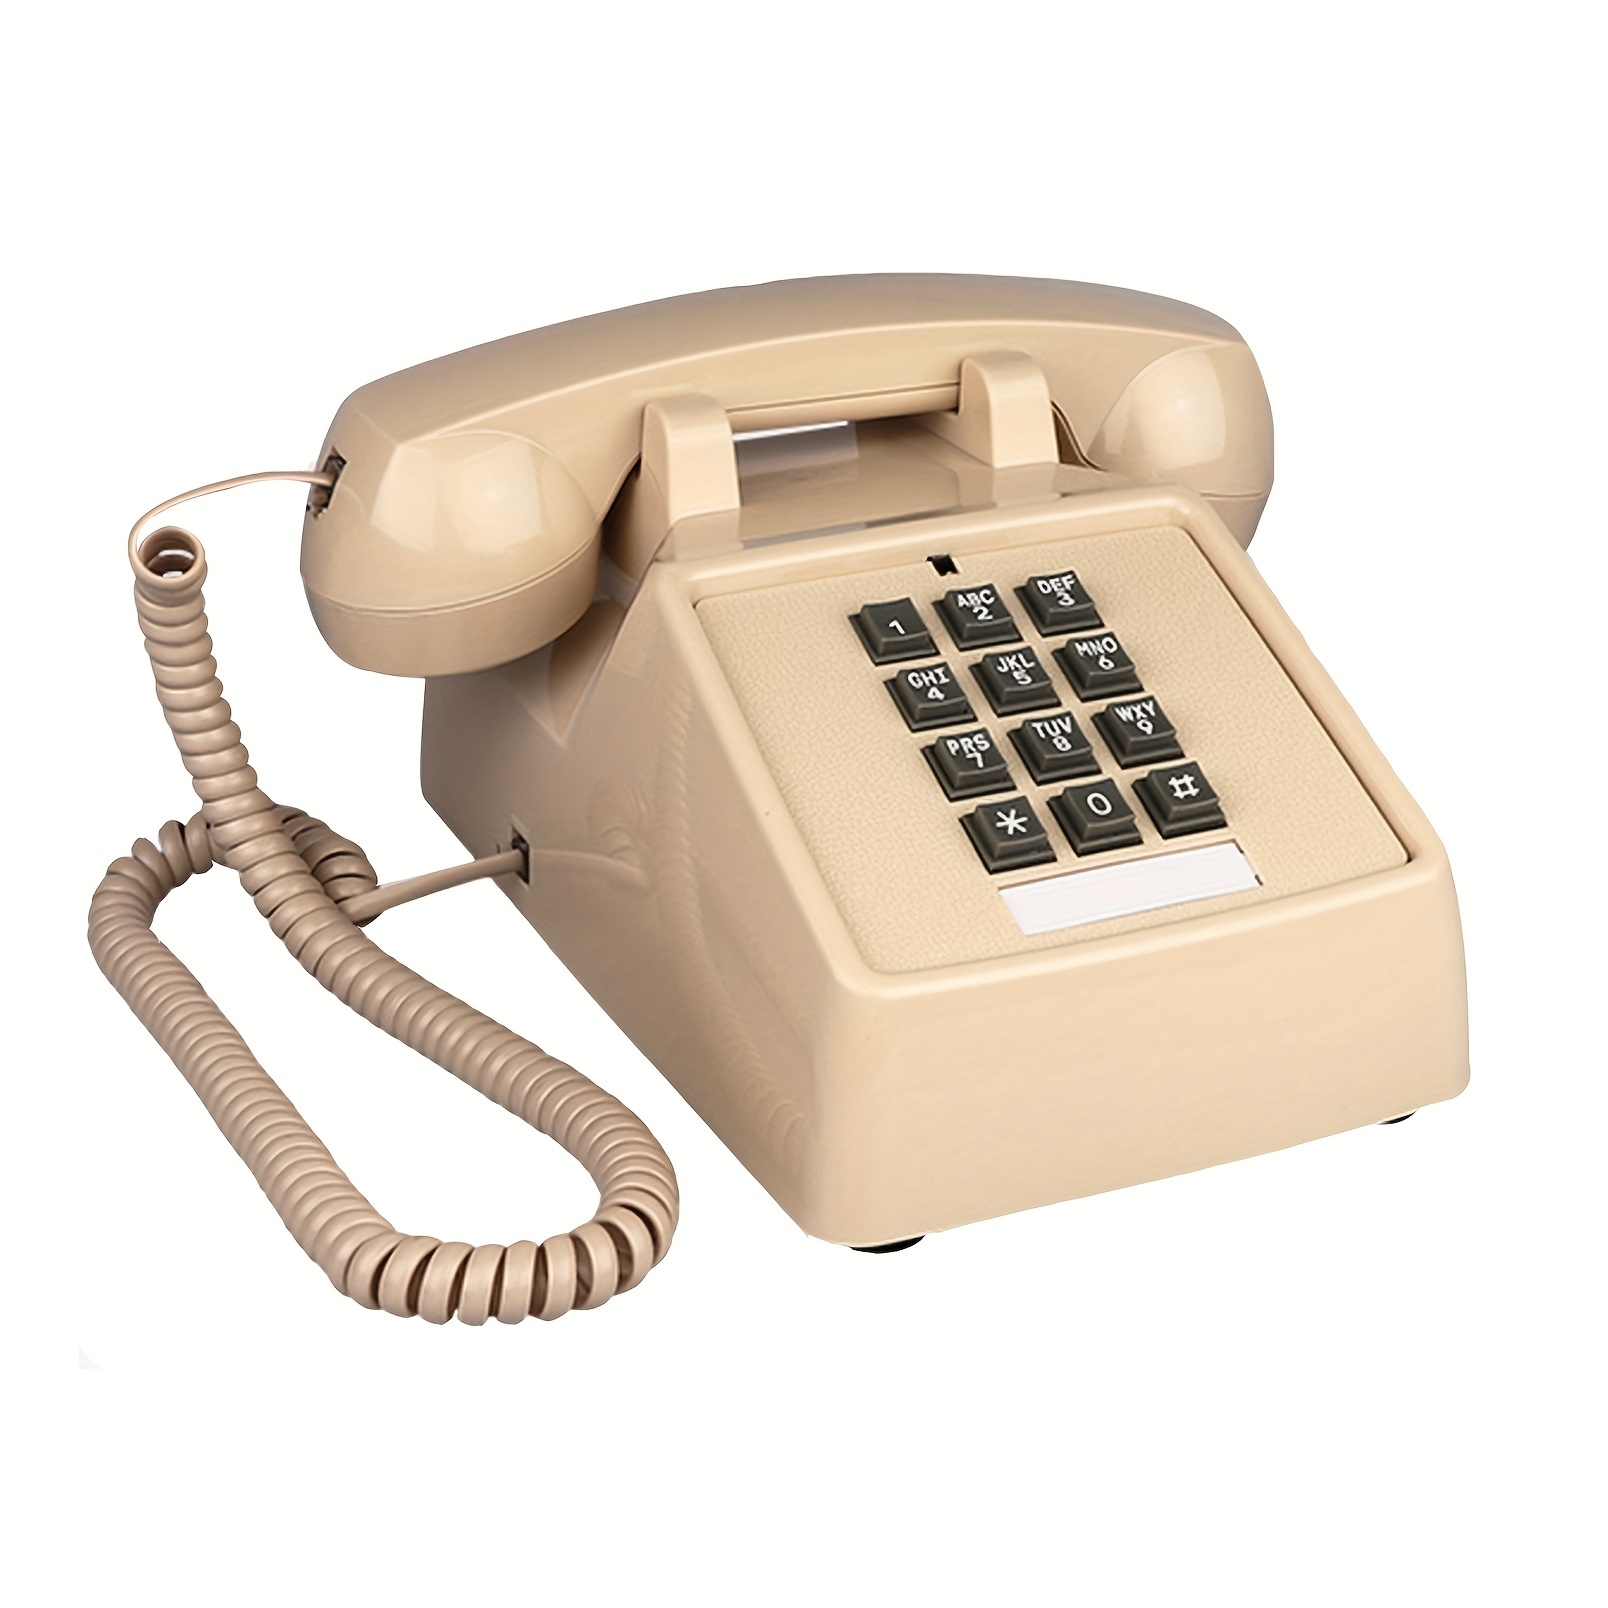 Resin Telefonos Retro Vintage Antique Fixed Telephones Landline